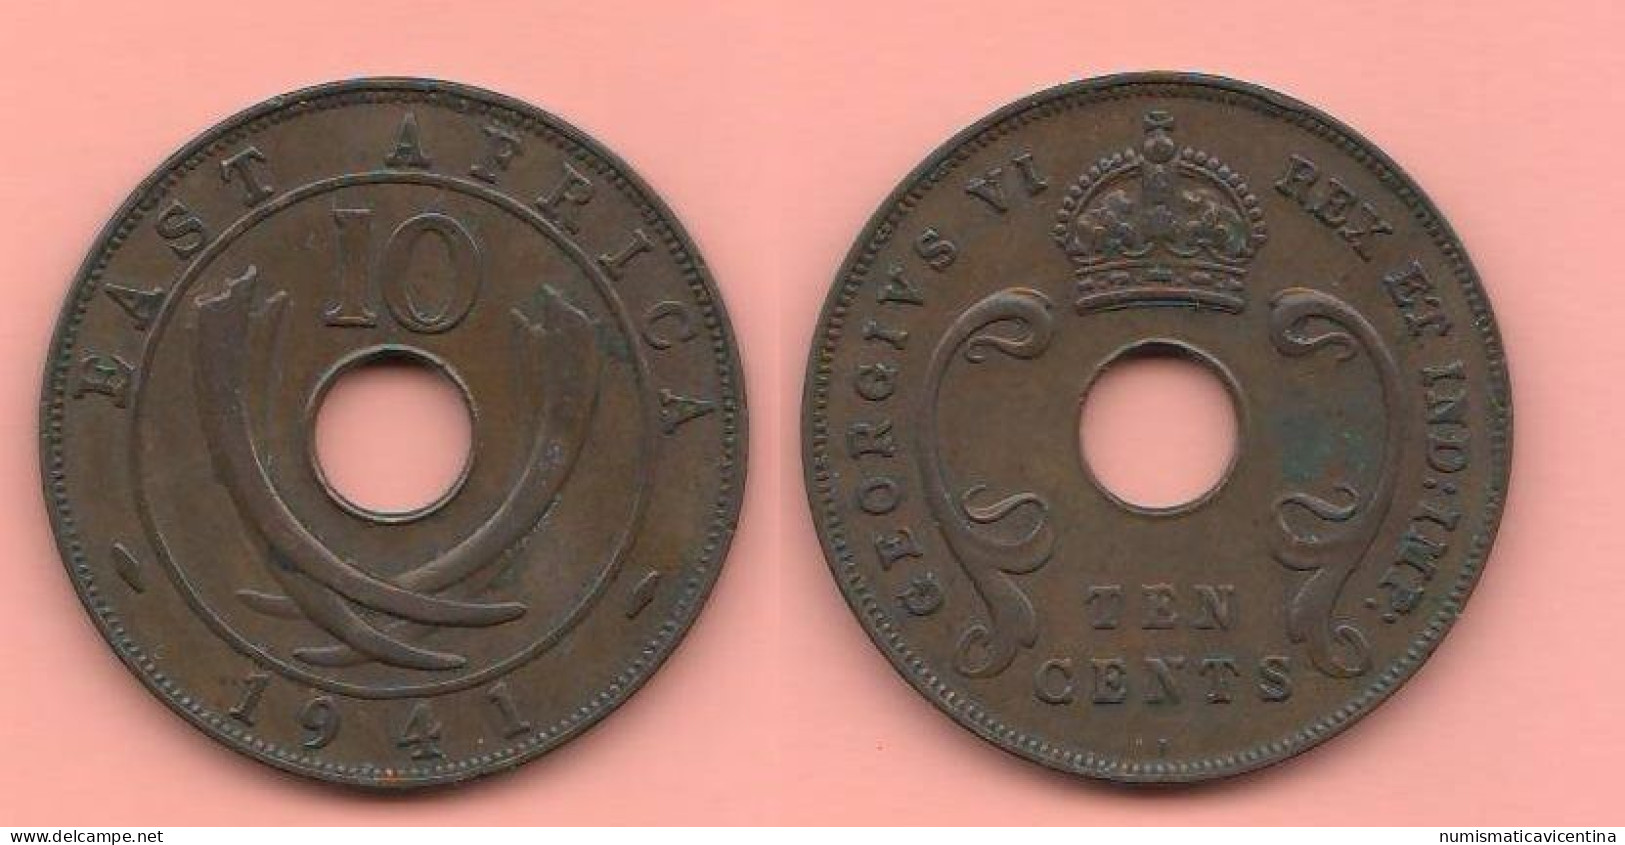 East Africa 10 Cents 1941 Great Britain Protectorate Oriental Afrique Bronze Coin King Georgius VI° - Kolonien